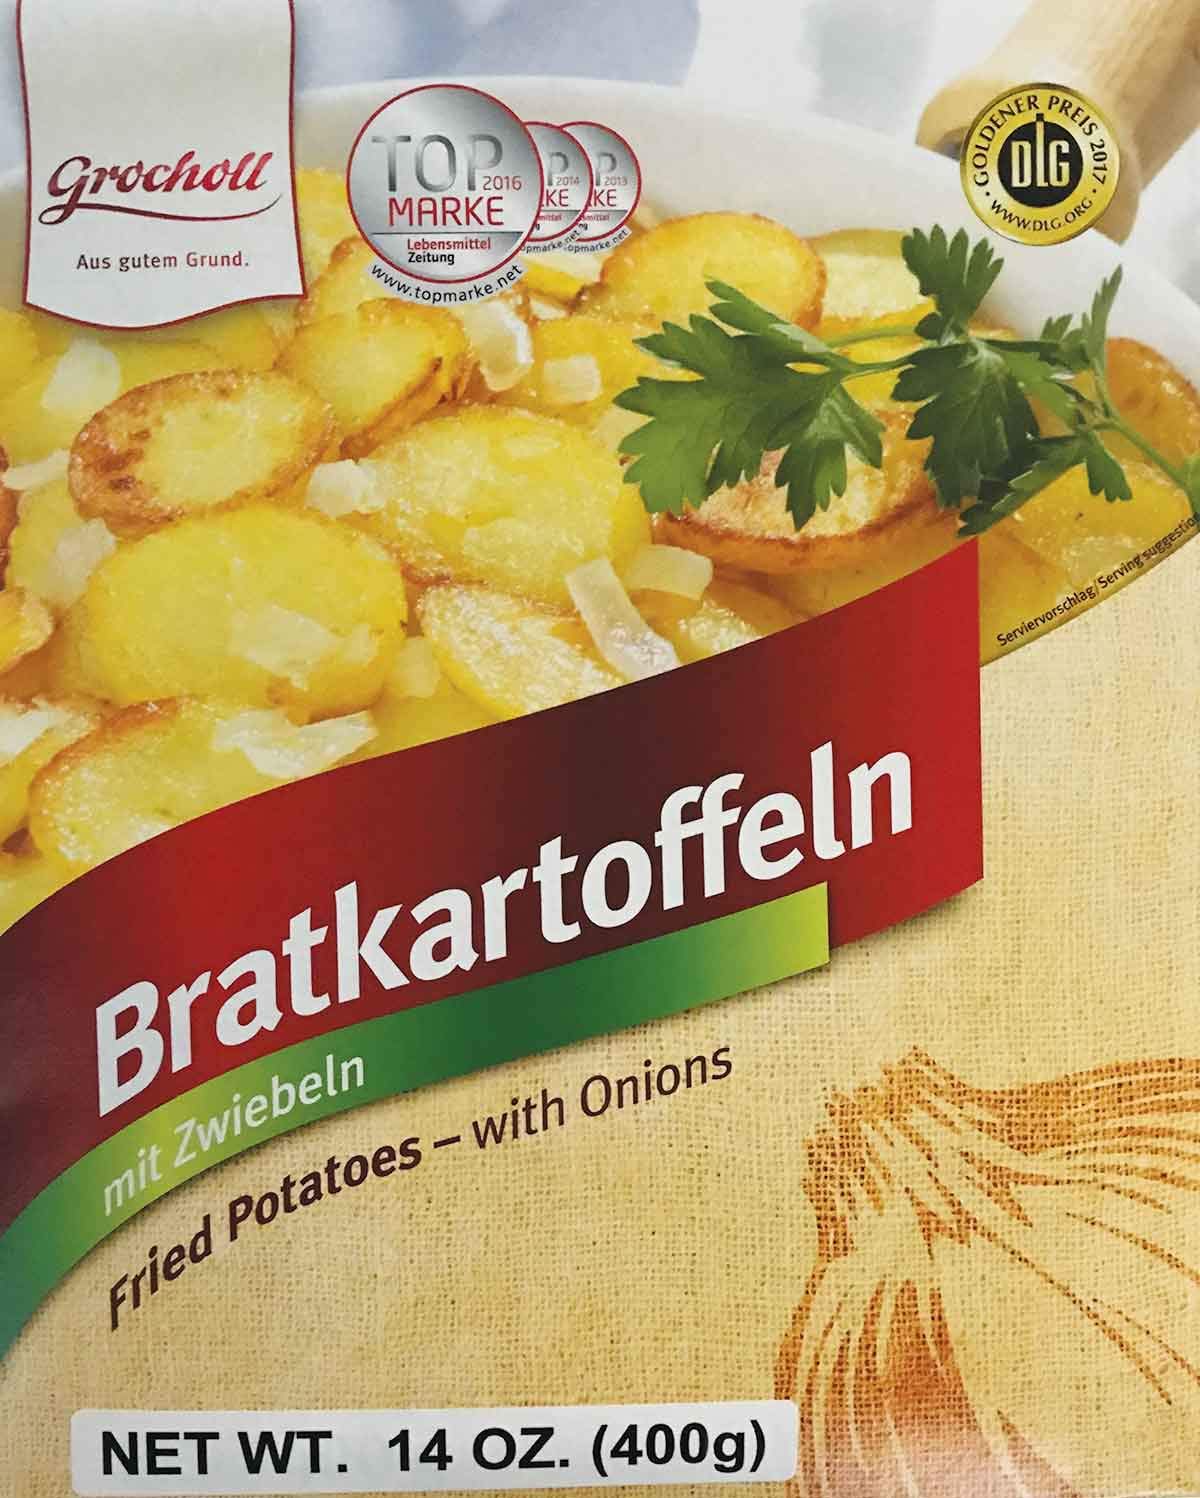 german fried potatoes from Grocholl